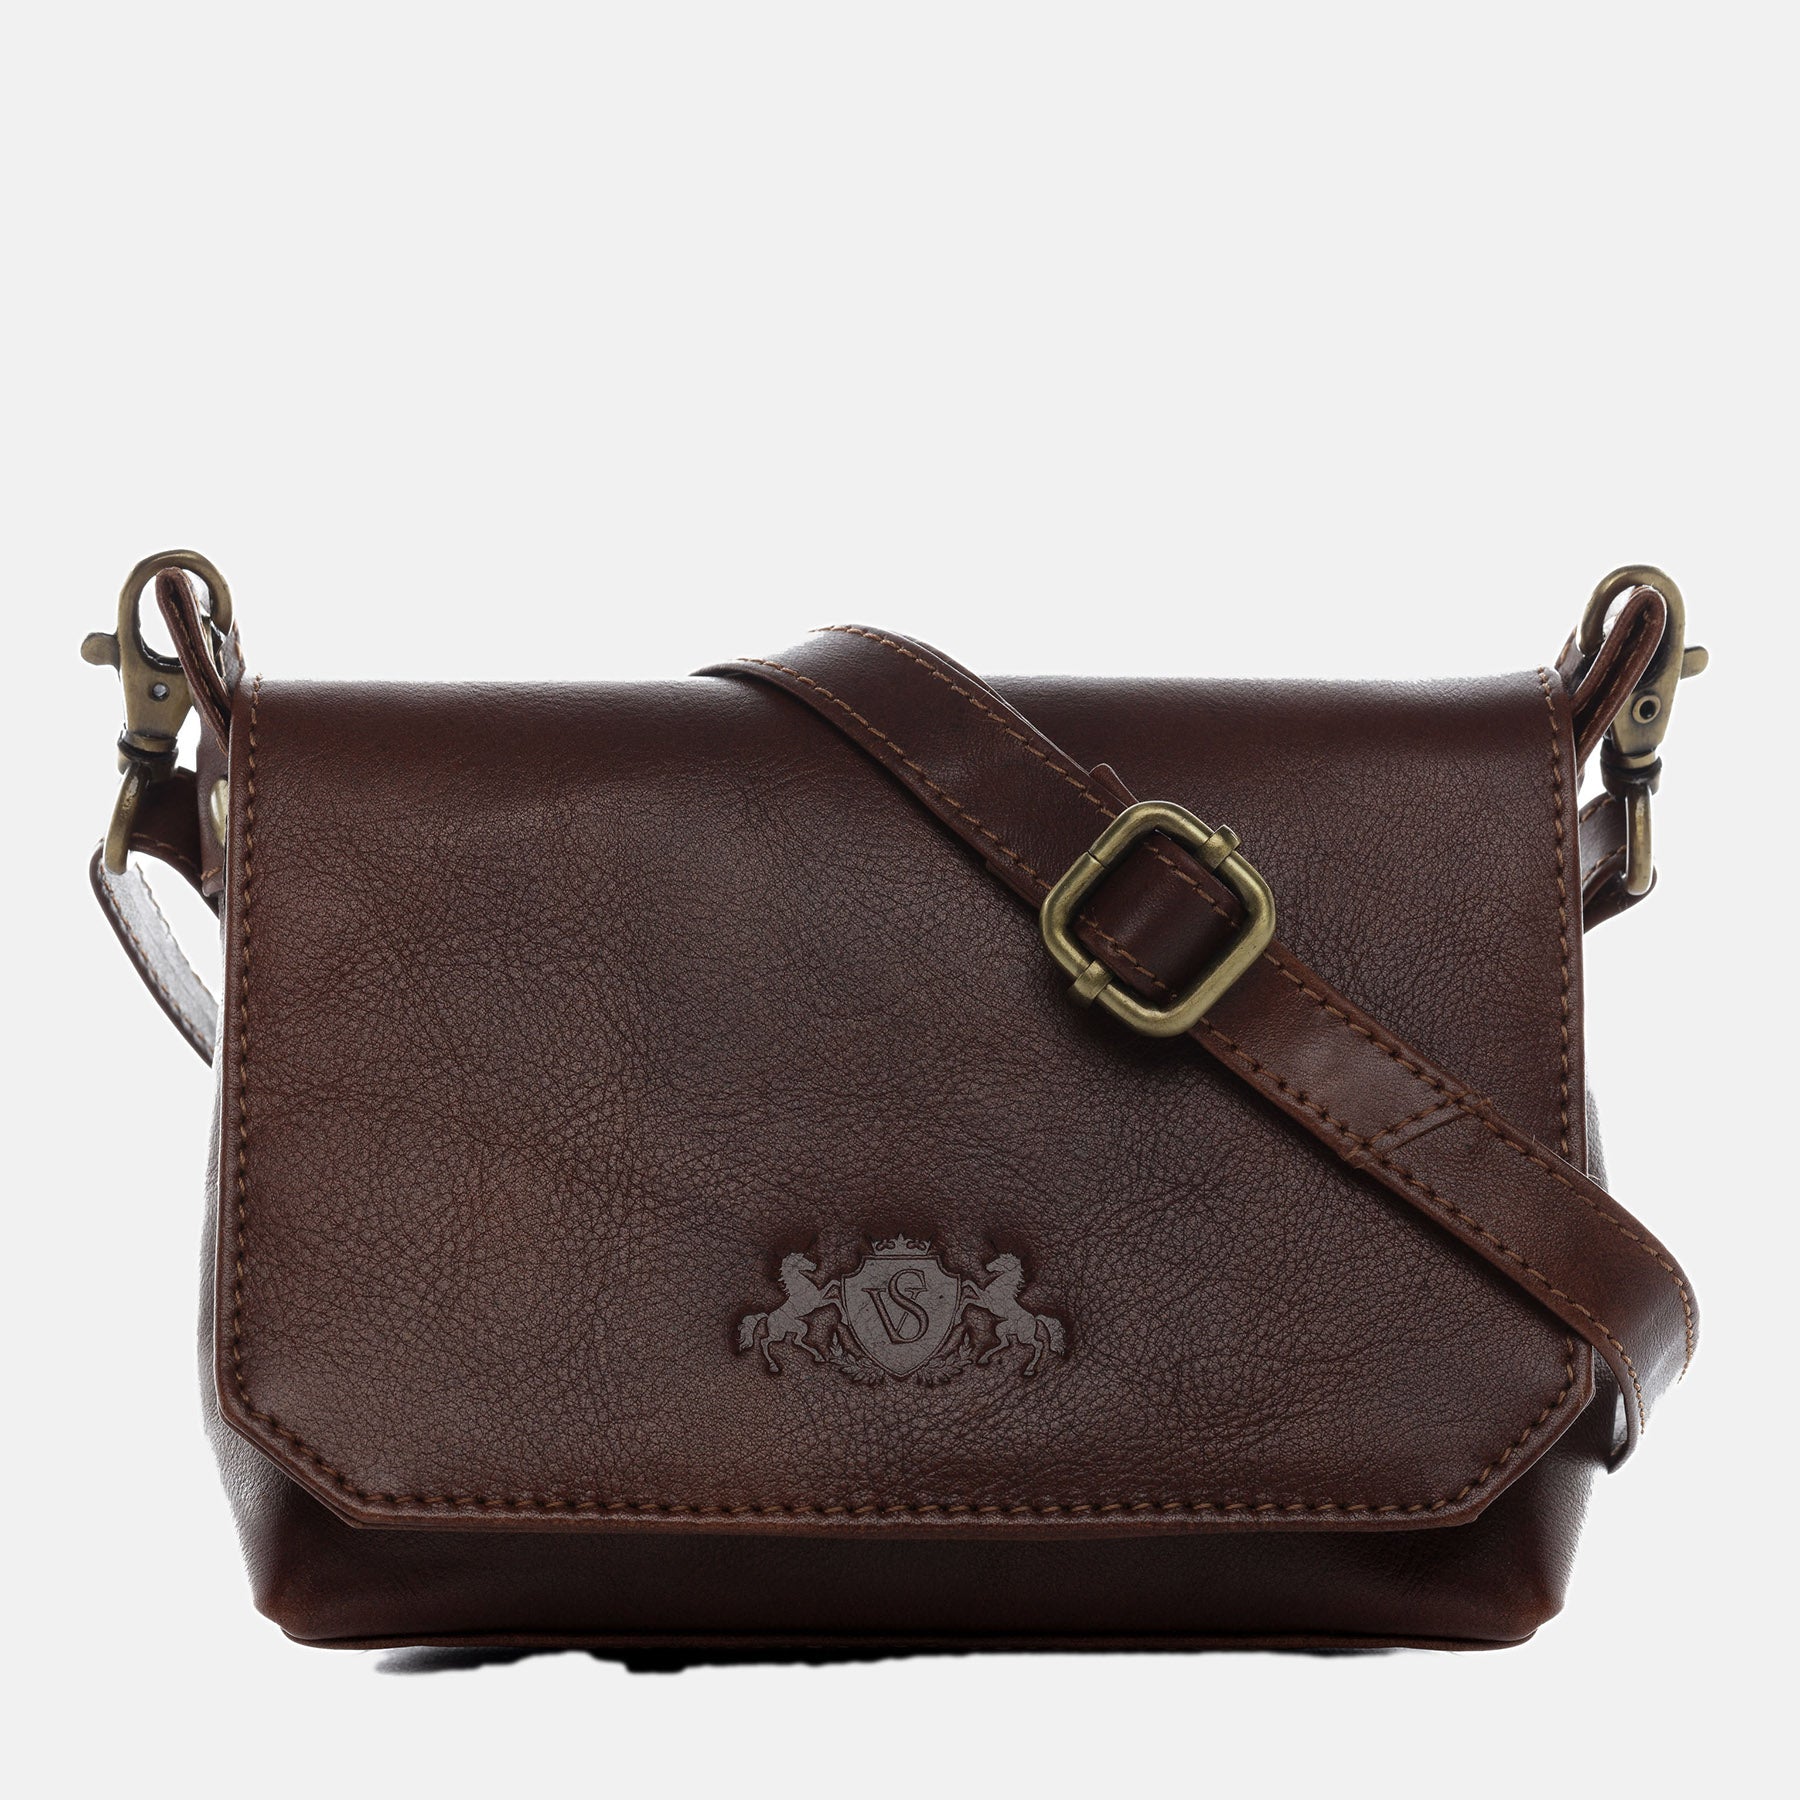 Shoulder bag KERBY smooth leather brown